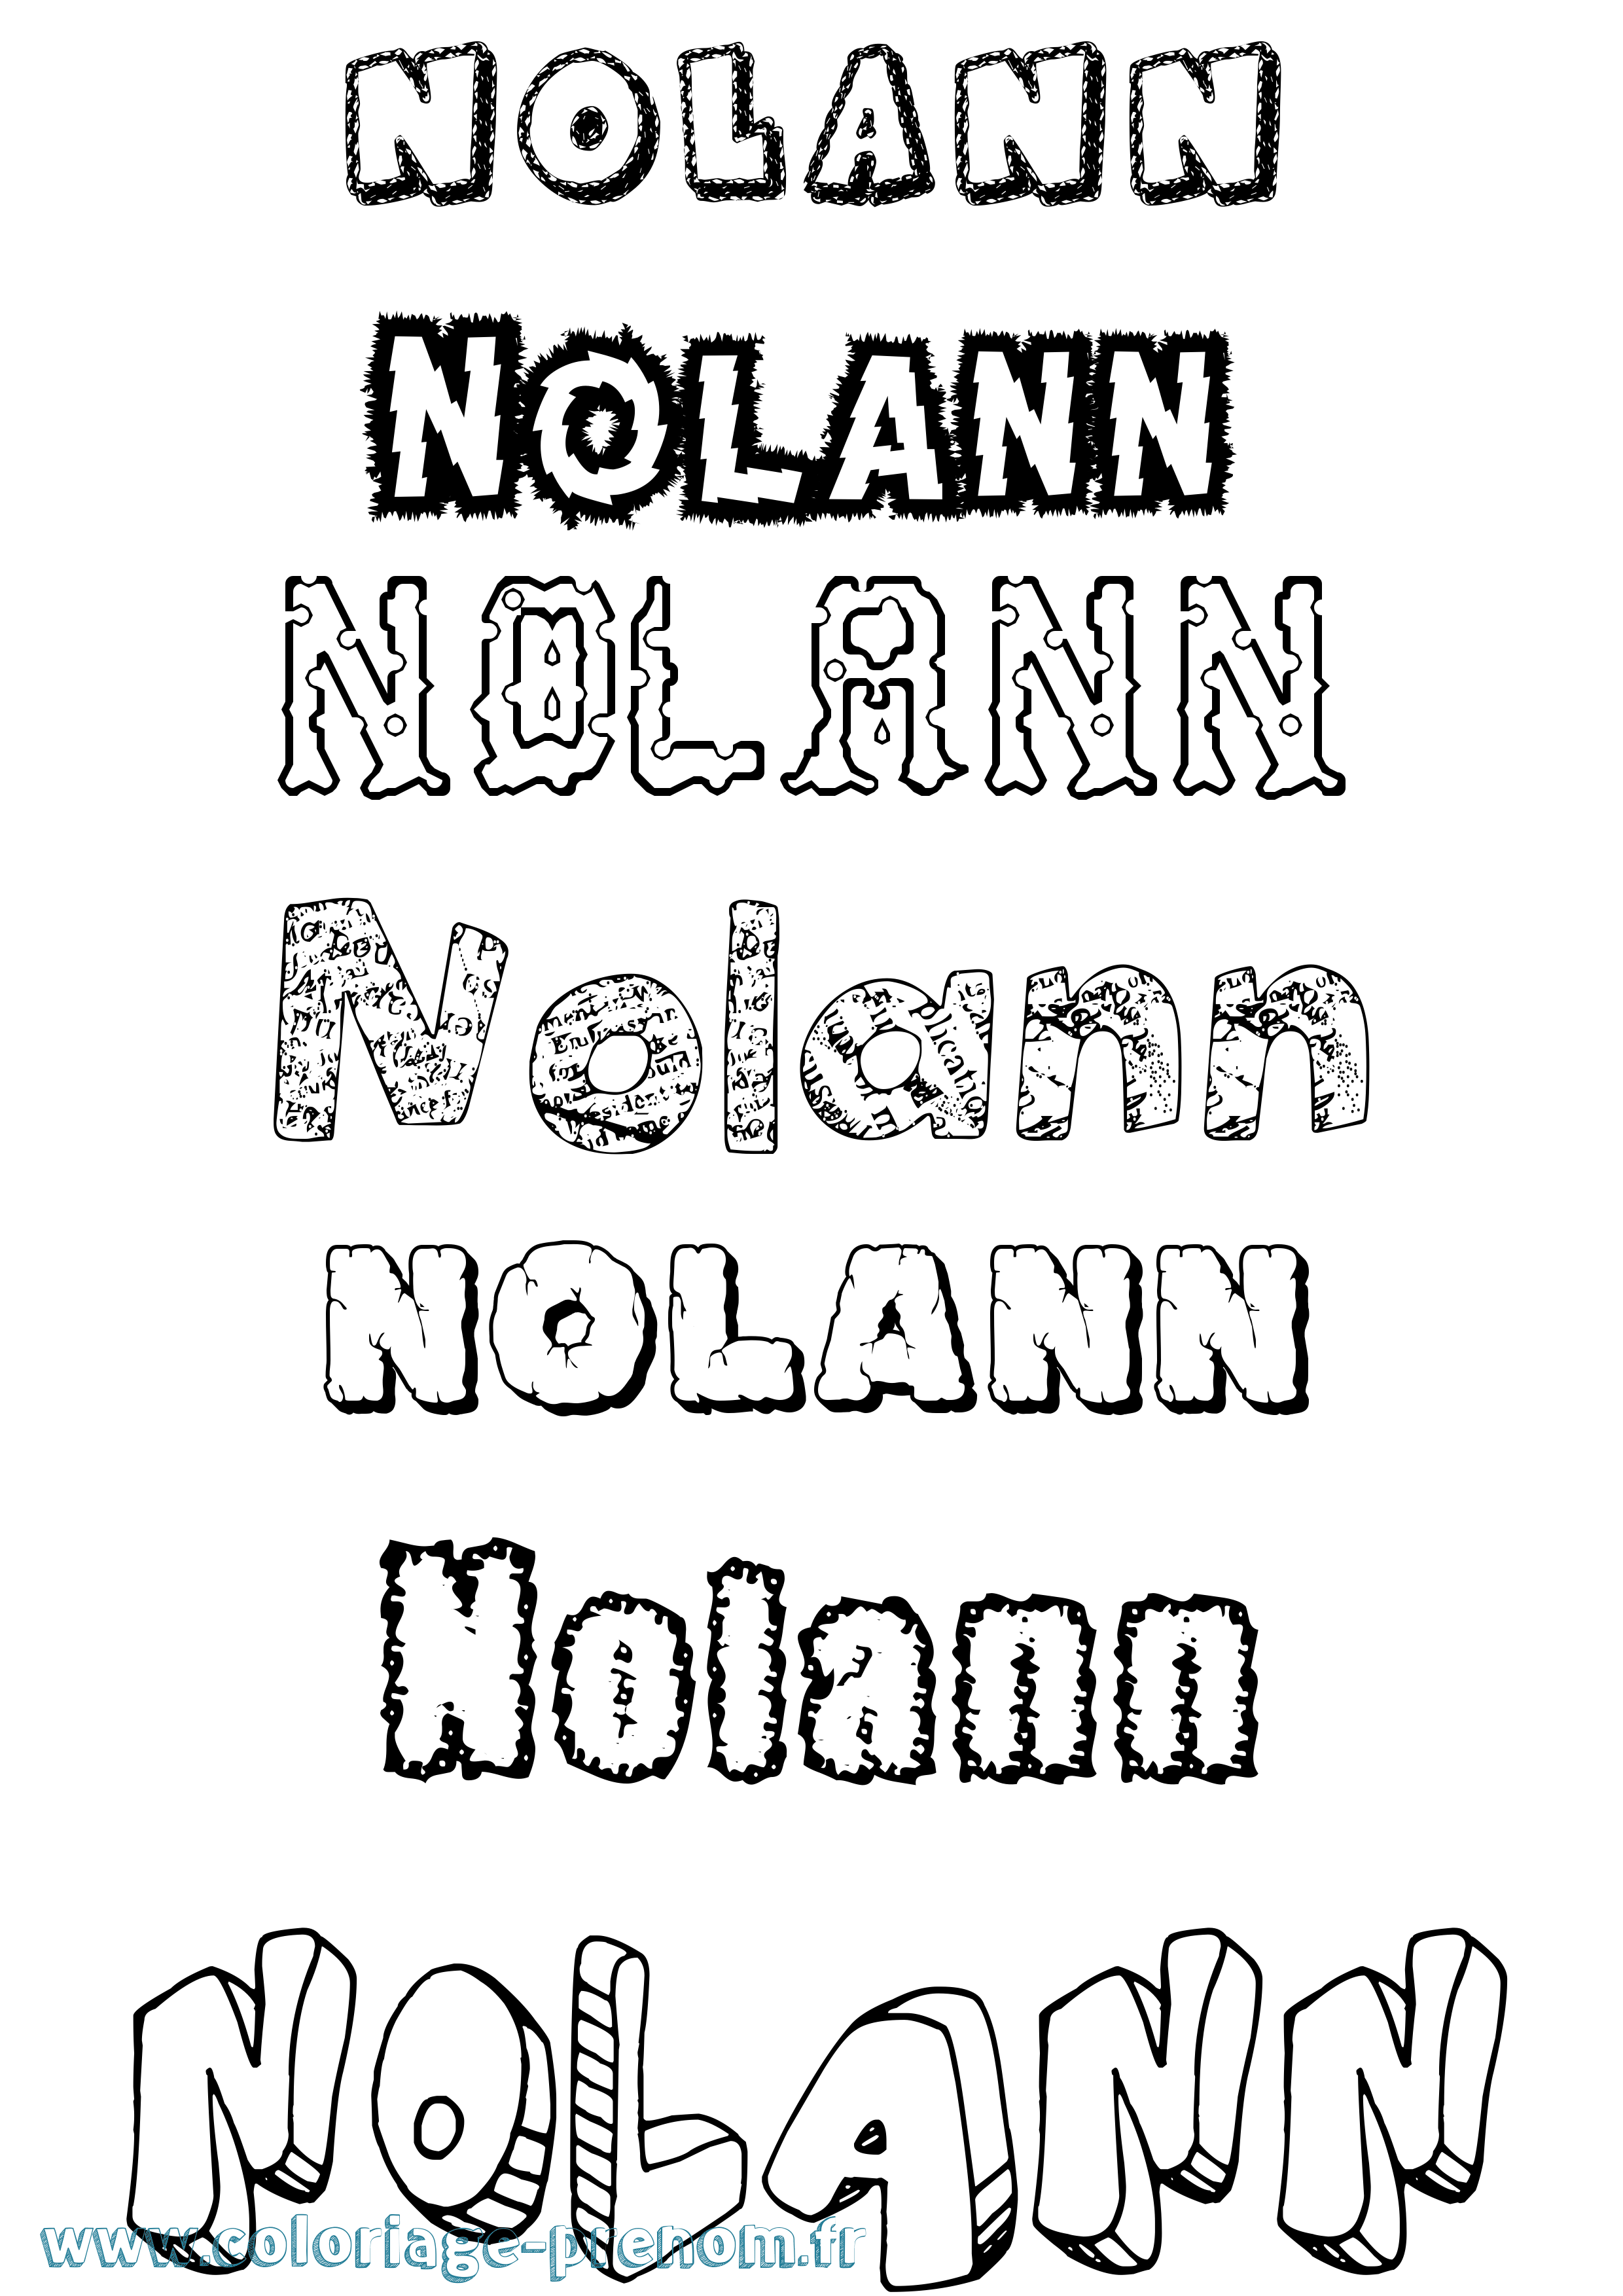 Coloriage prénom Nolann